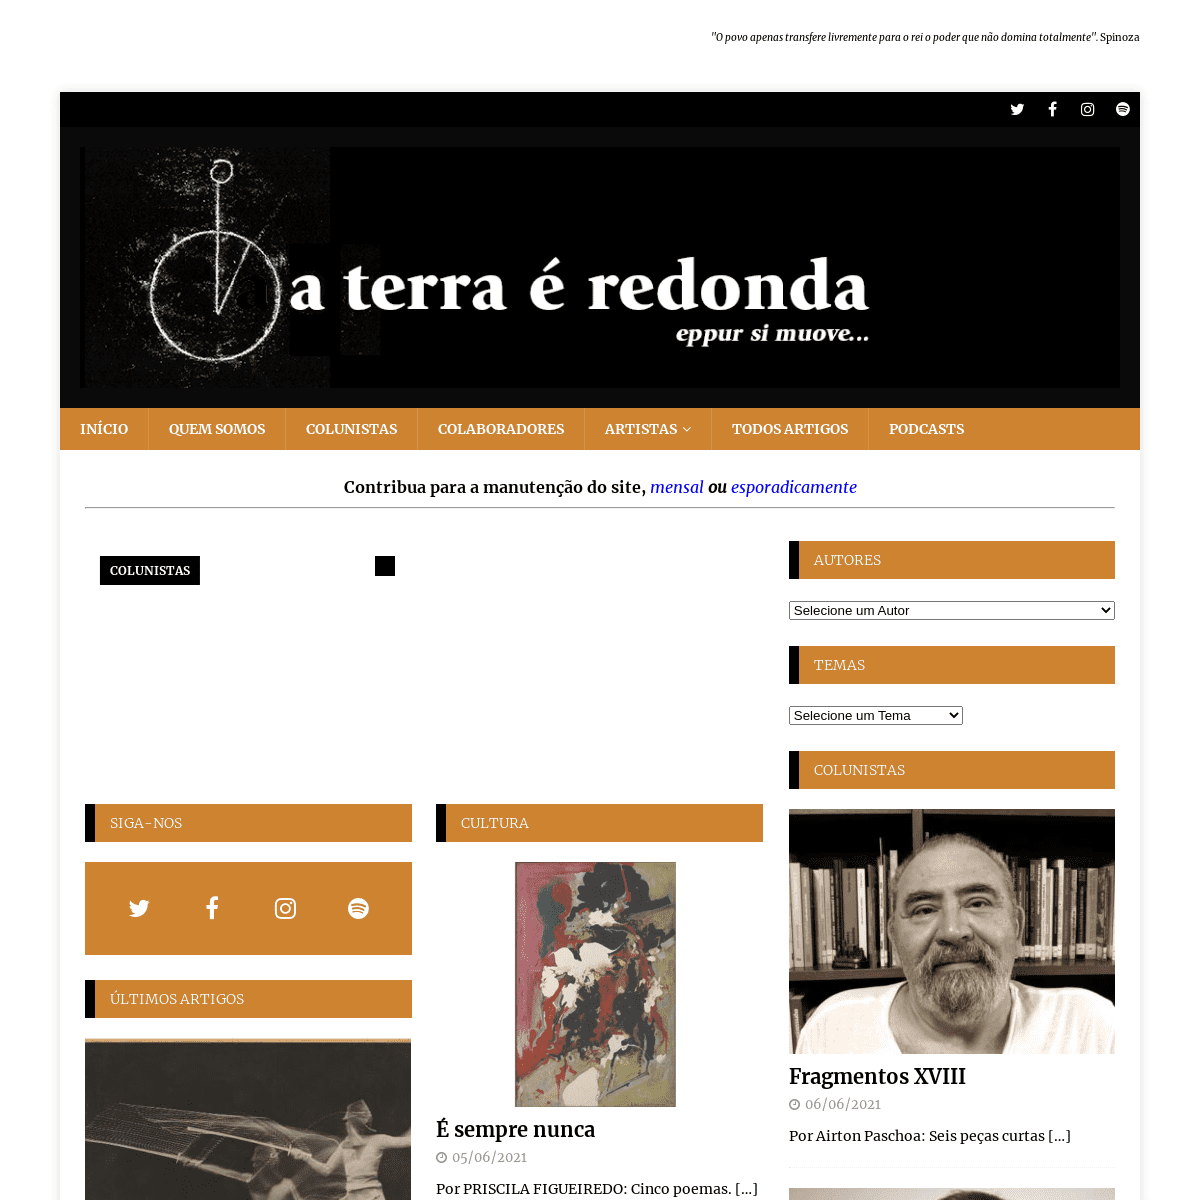 A complete backup of https://aterraeredonda.com.br